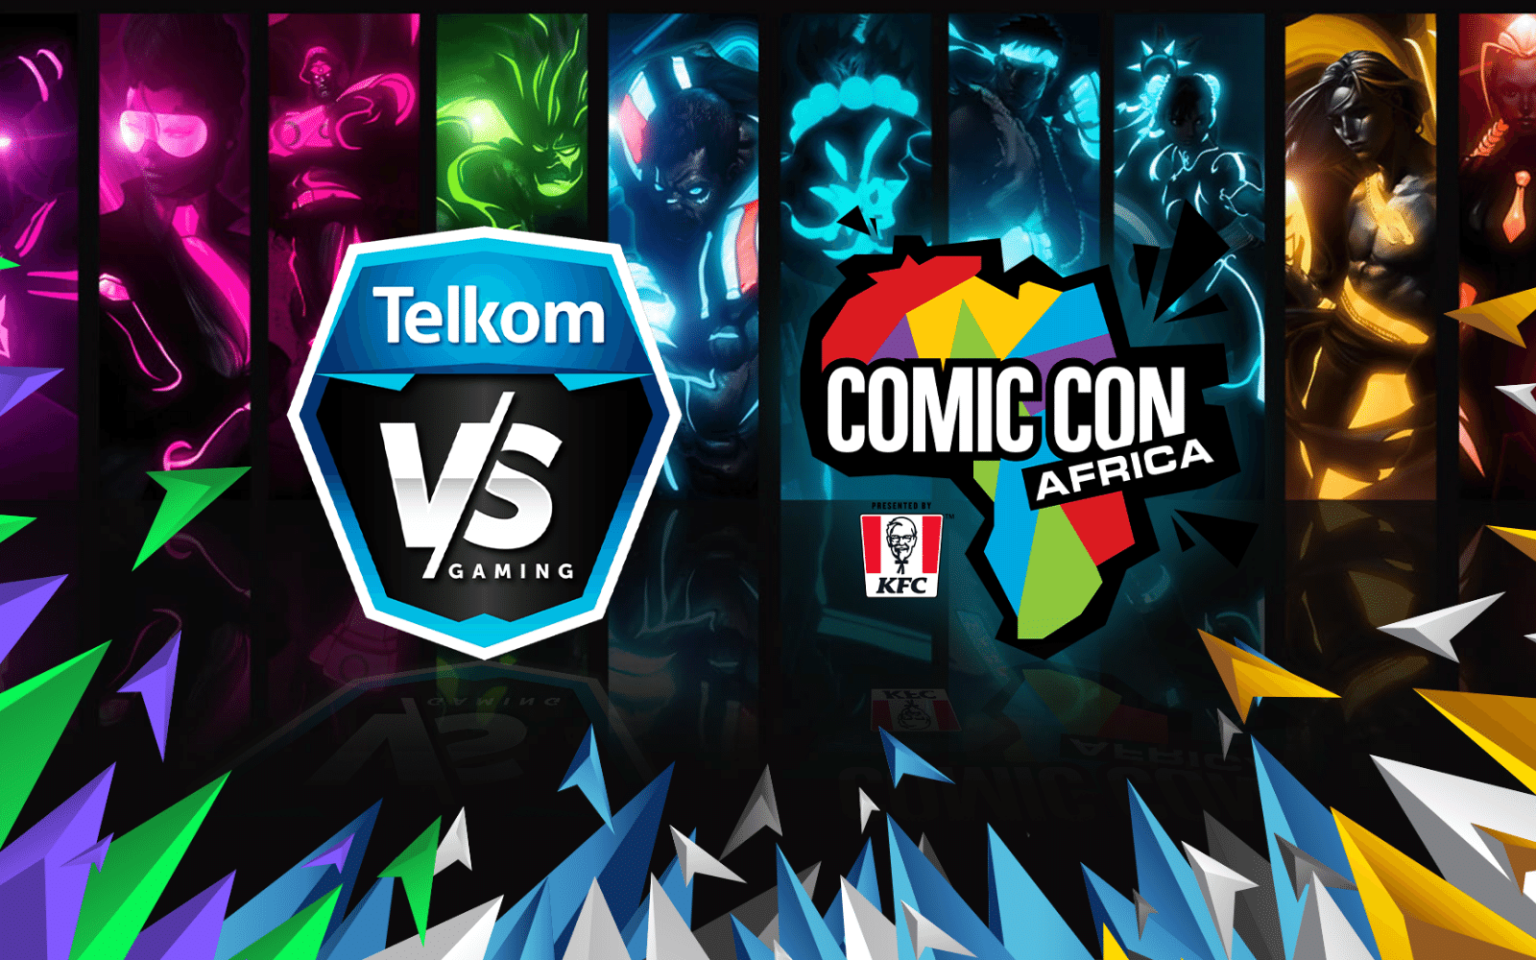 Telkom VS Gaming